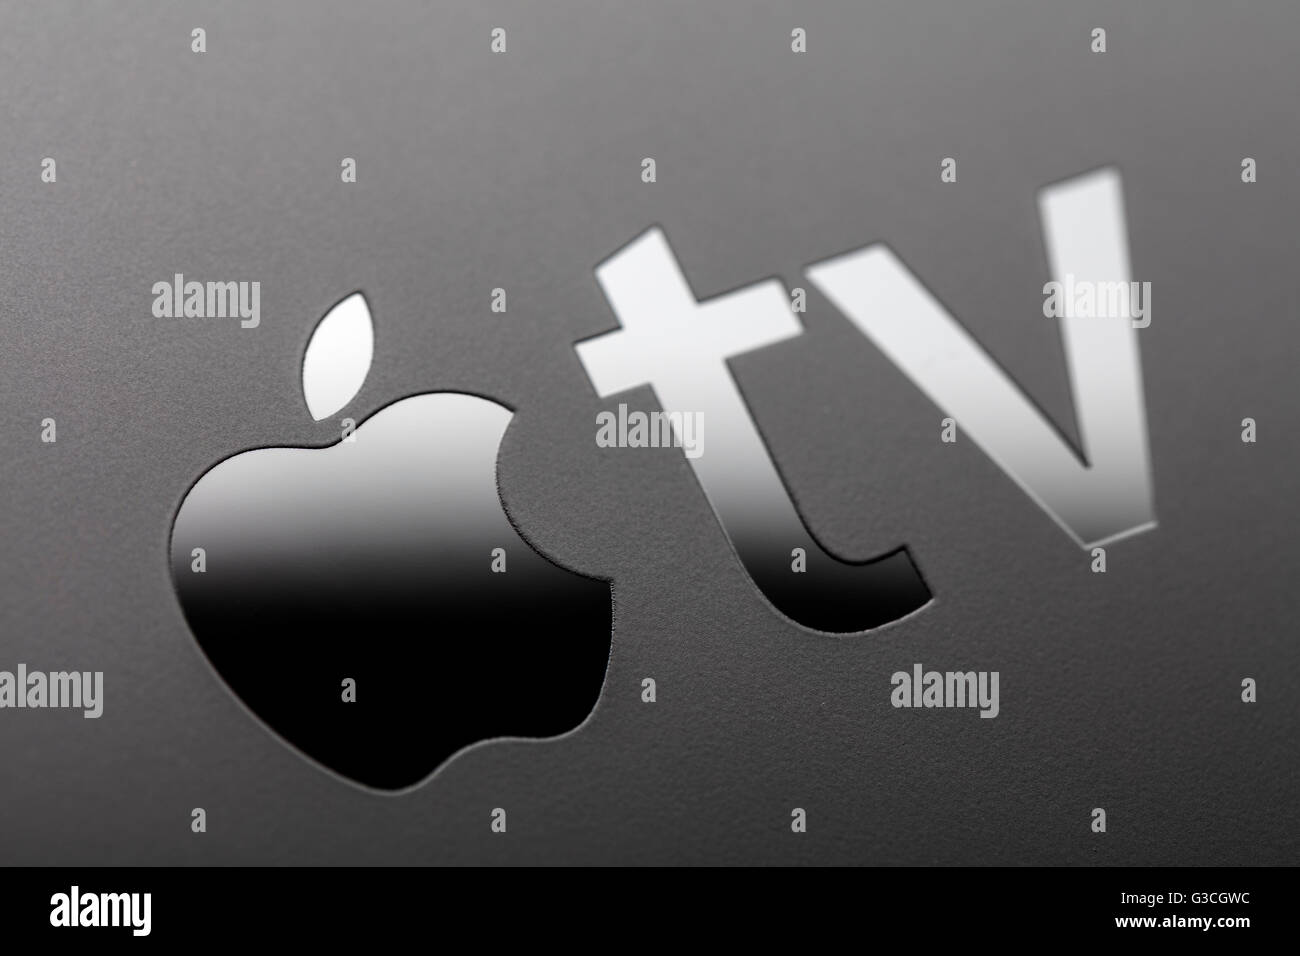 apple tv 4th generation